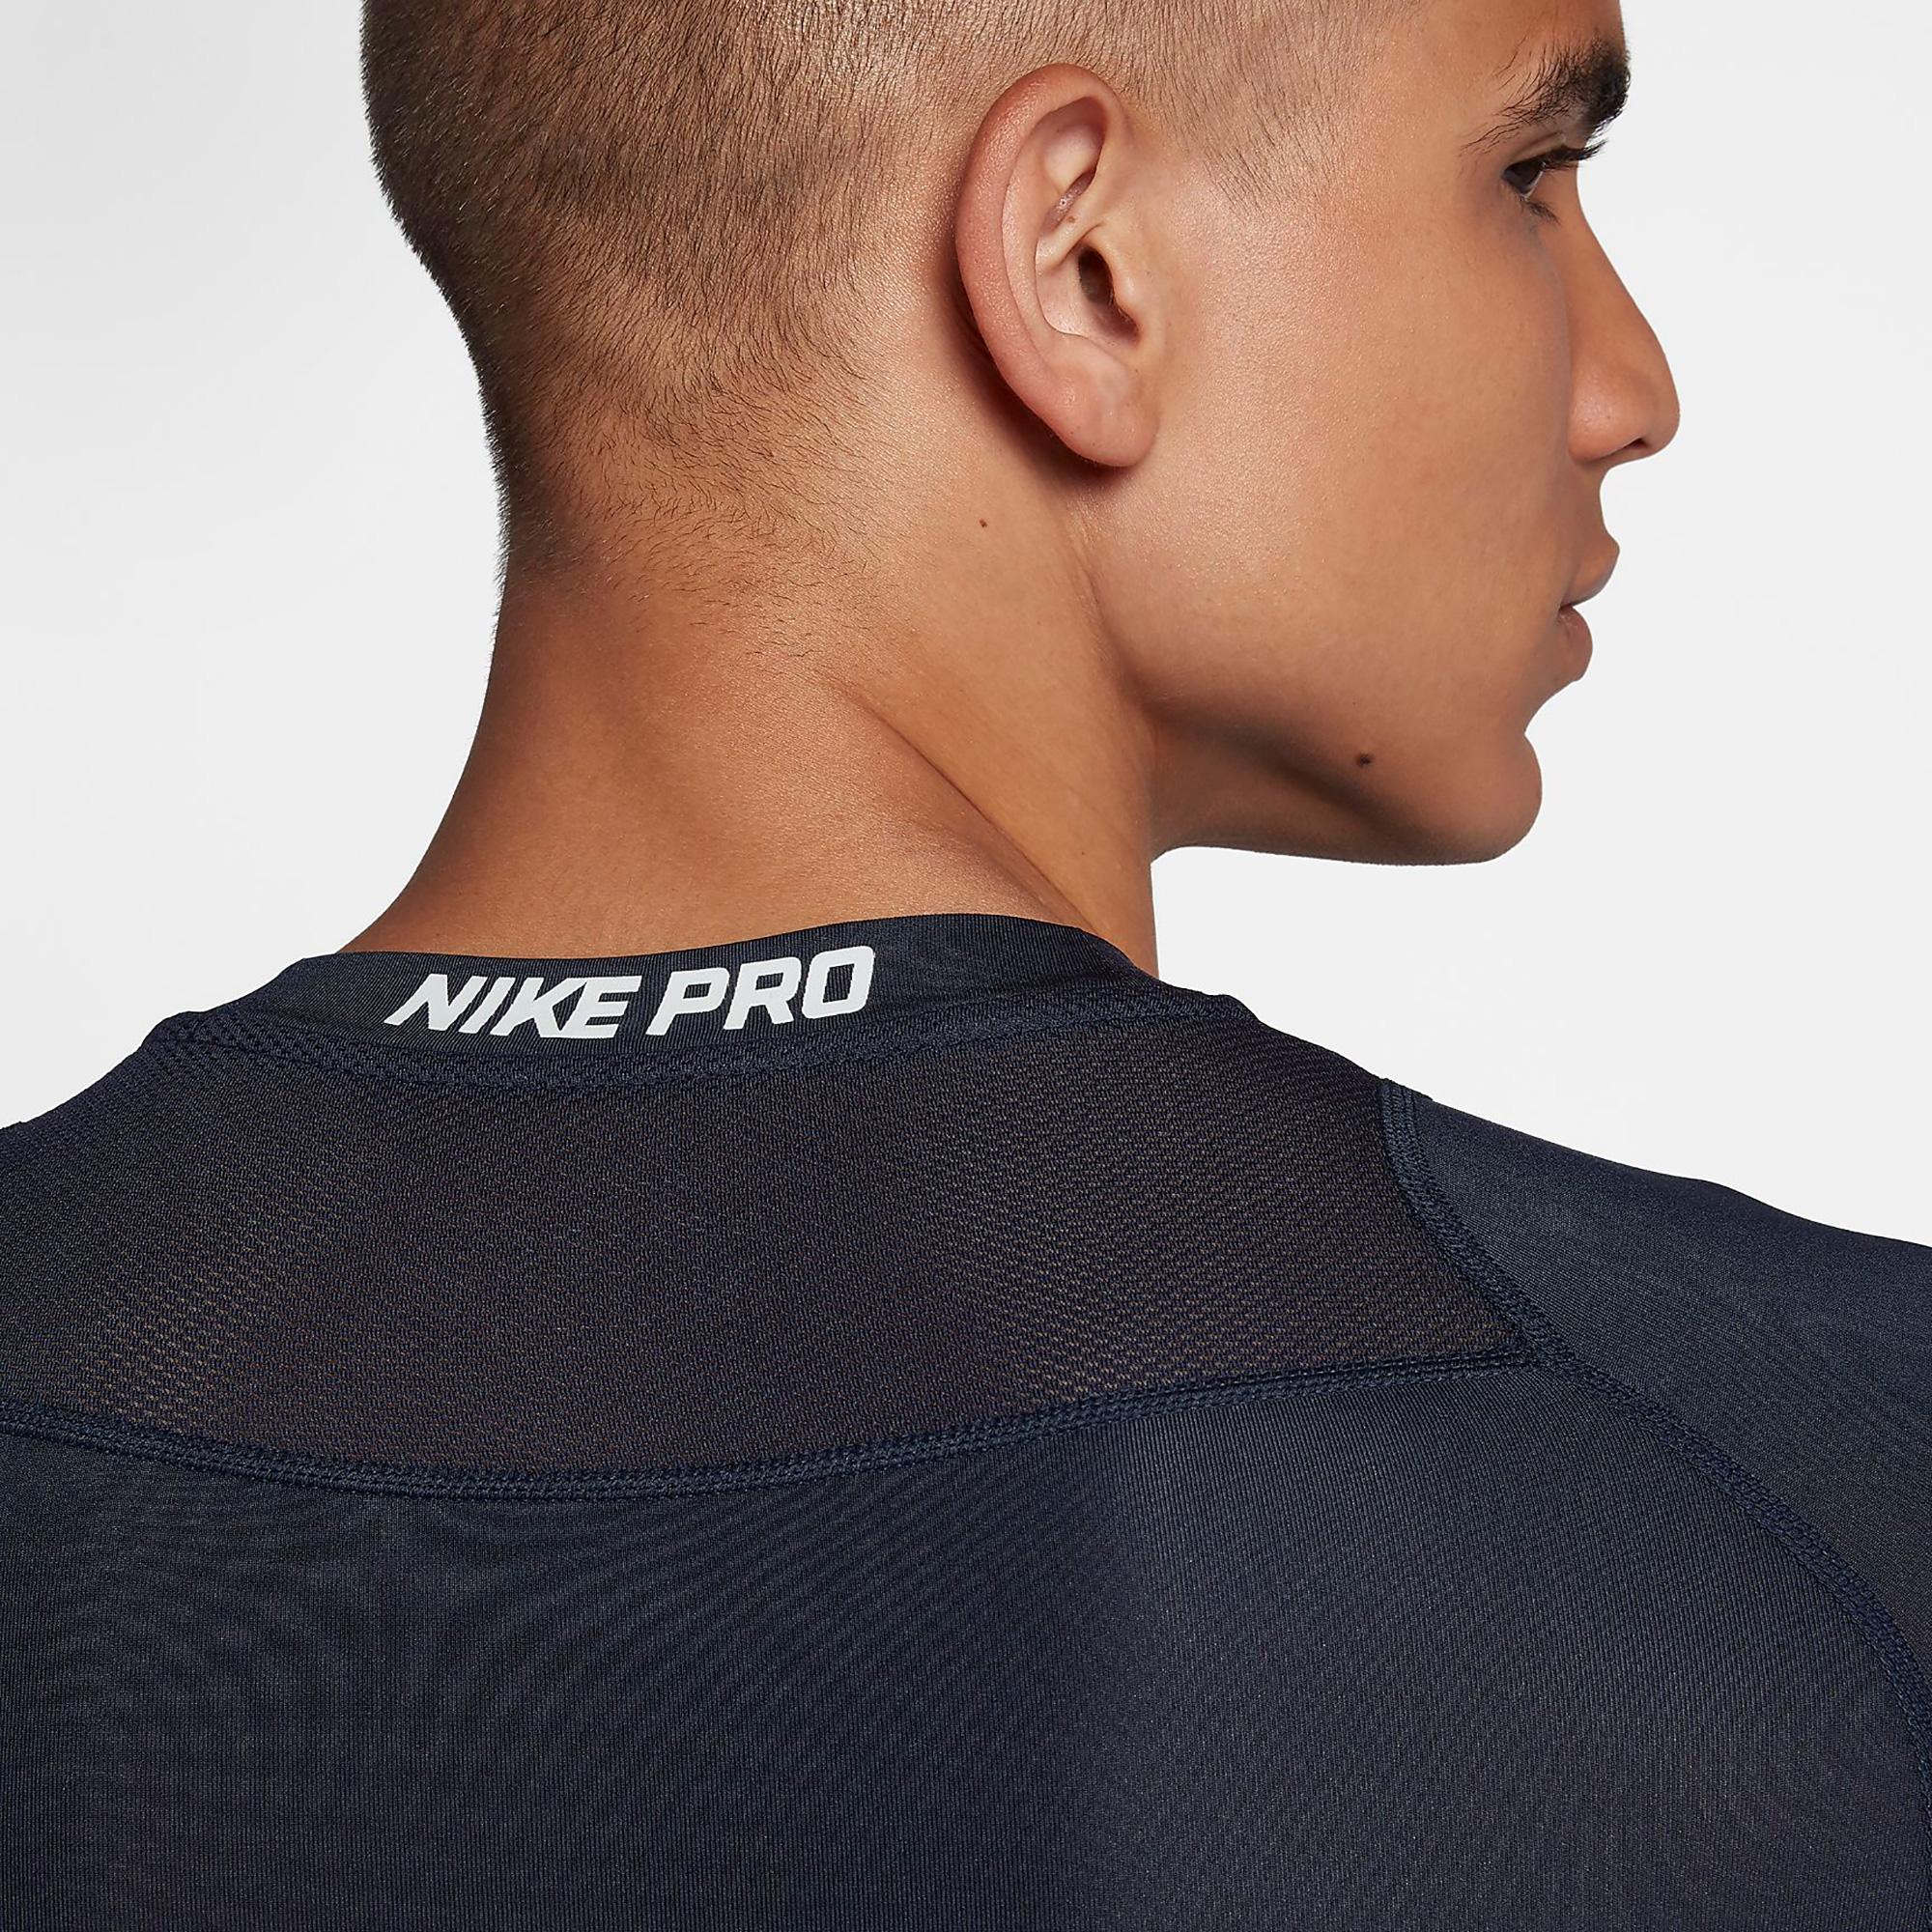 Nike Mens Pro Top - Obsidian/White - Tennisnuts.com